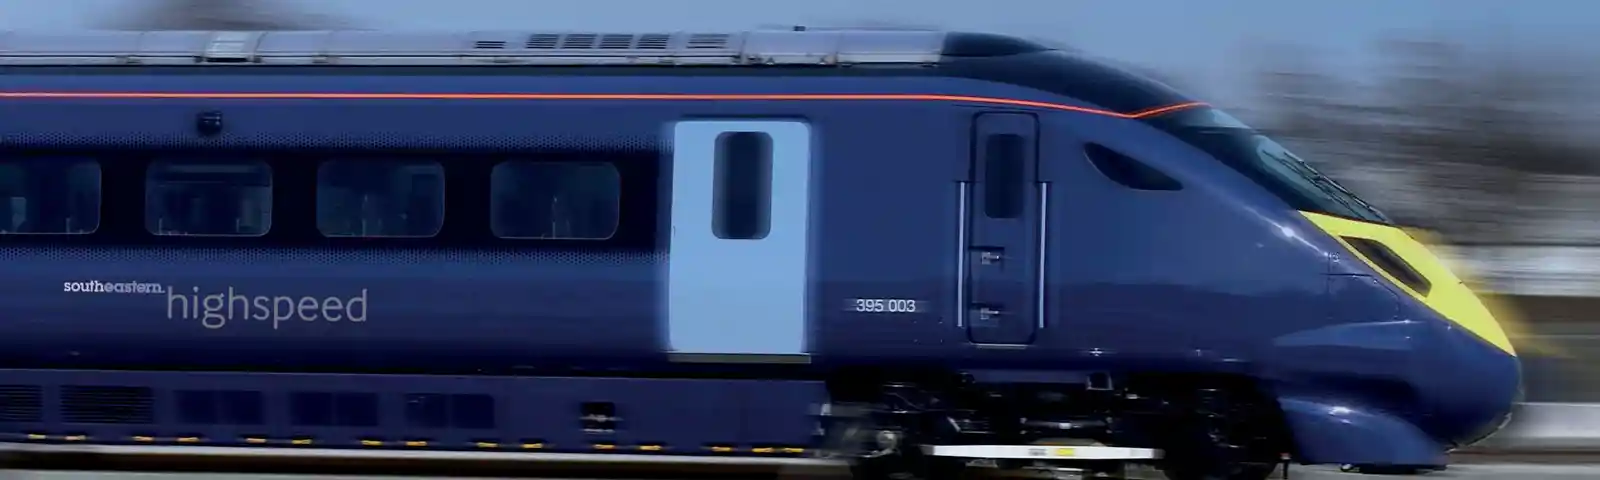 high-speed-train-with-branding-aug-08.jpg (1)